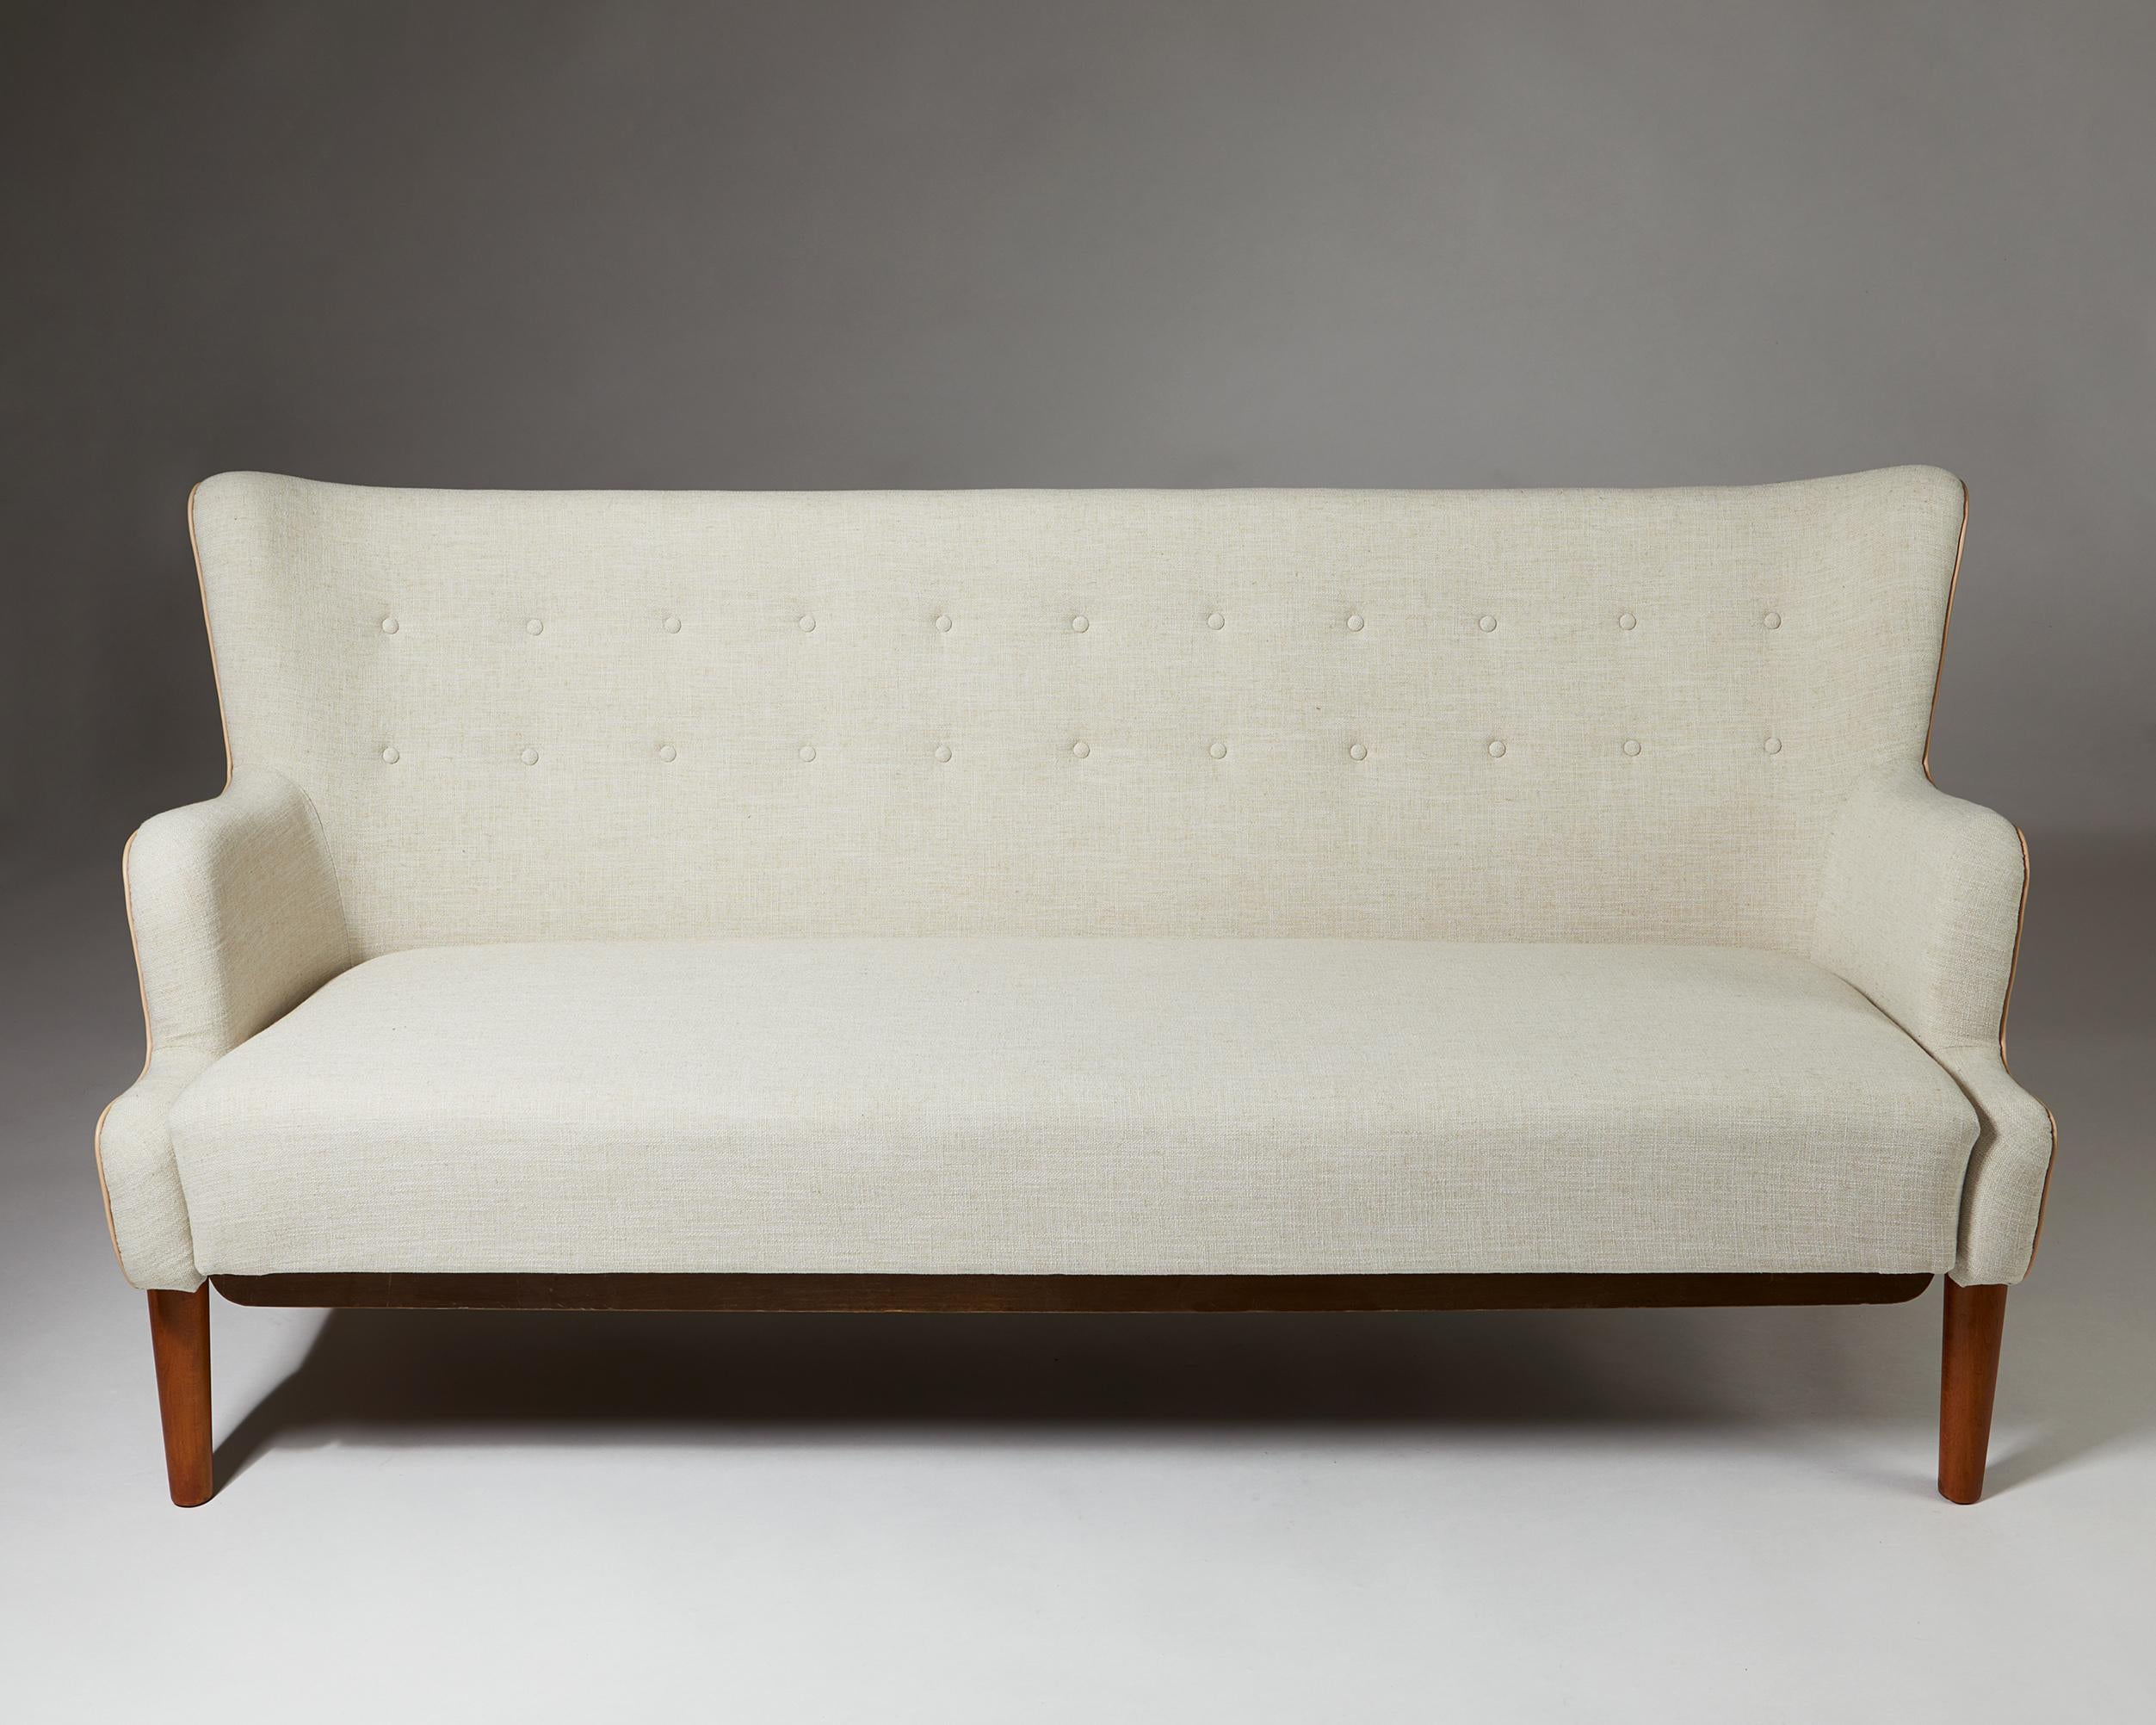 Scandinavian Modern Sofa “Koppel” Designed by Eva and Nils Koppel for Slagelse Møbelværk, Denmark